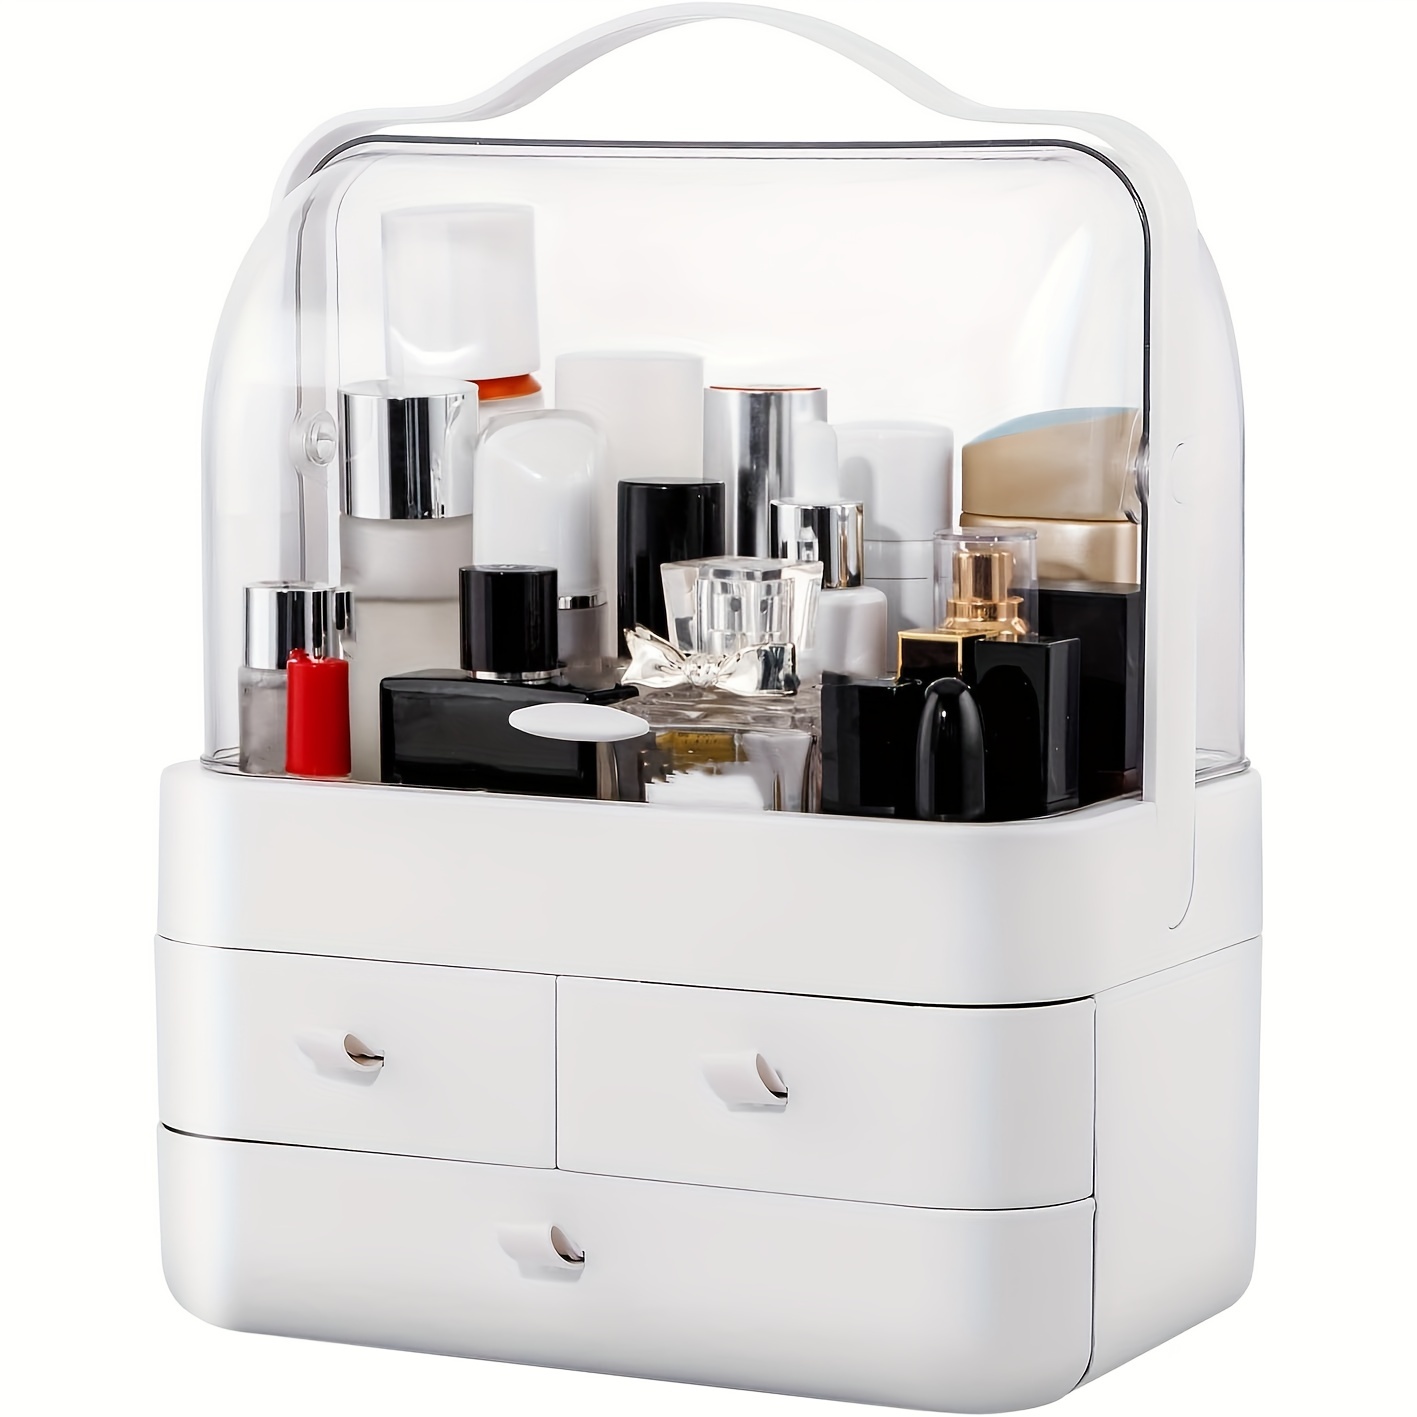 Preppy Skincare & Makeup Organizer Storage Drawer